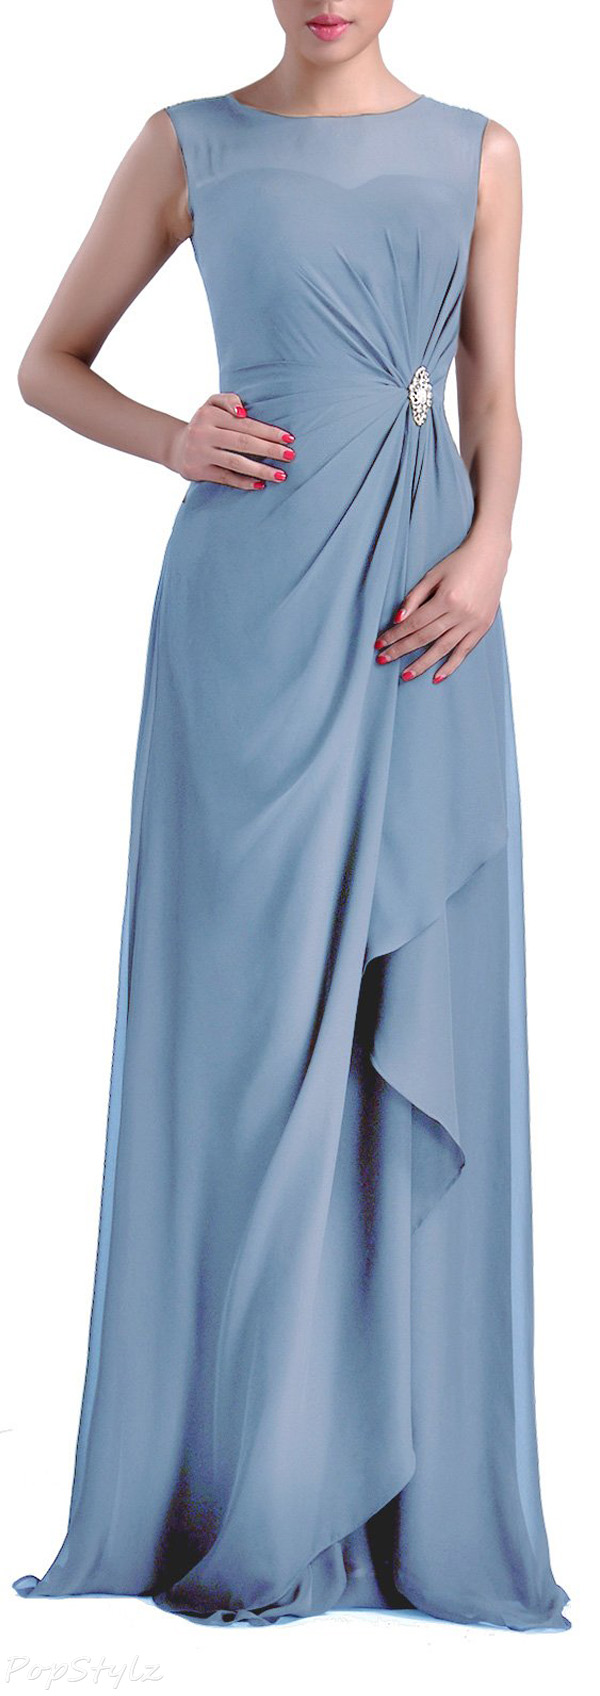 Adorona Long Sleeveless Sheath Formal Dress